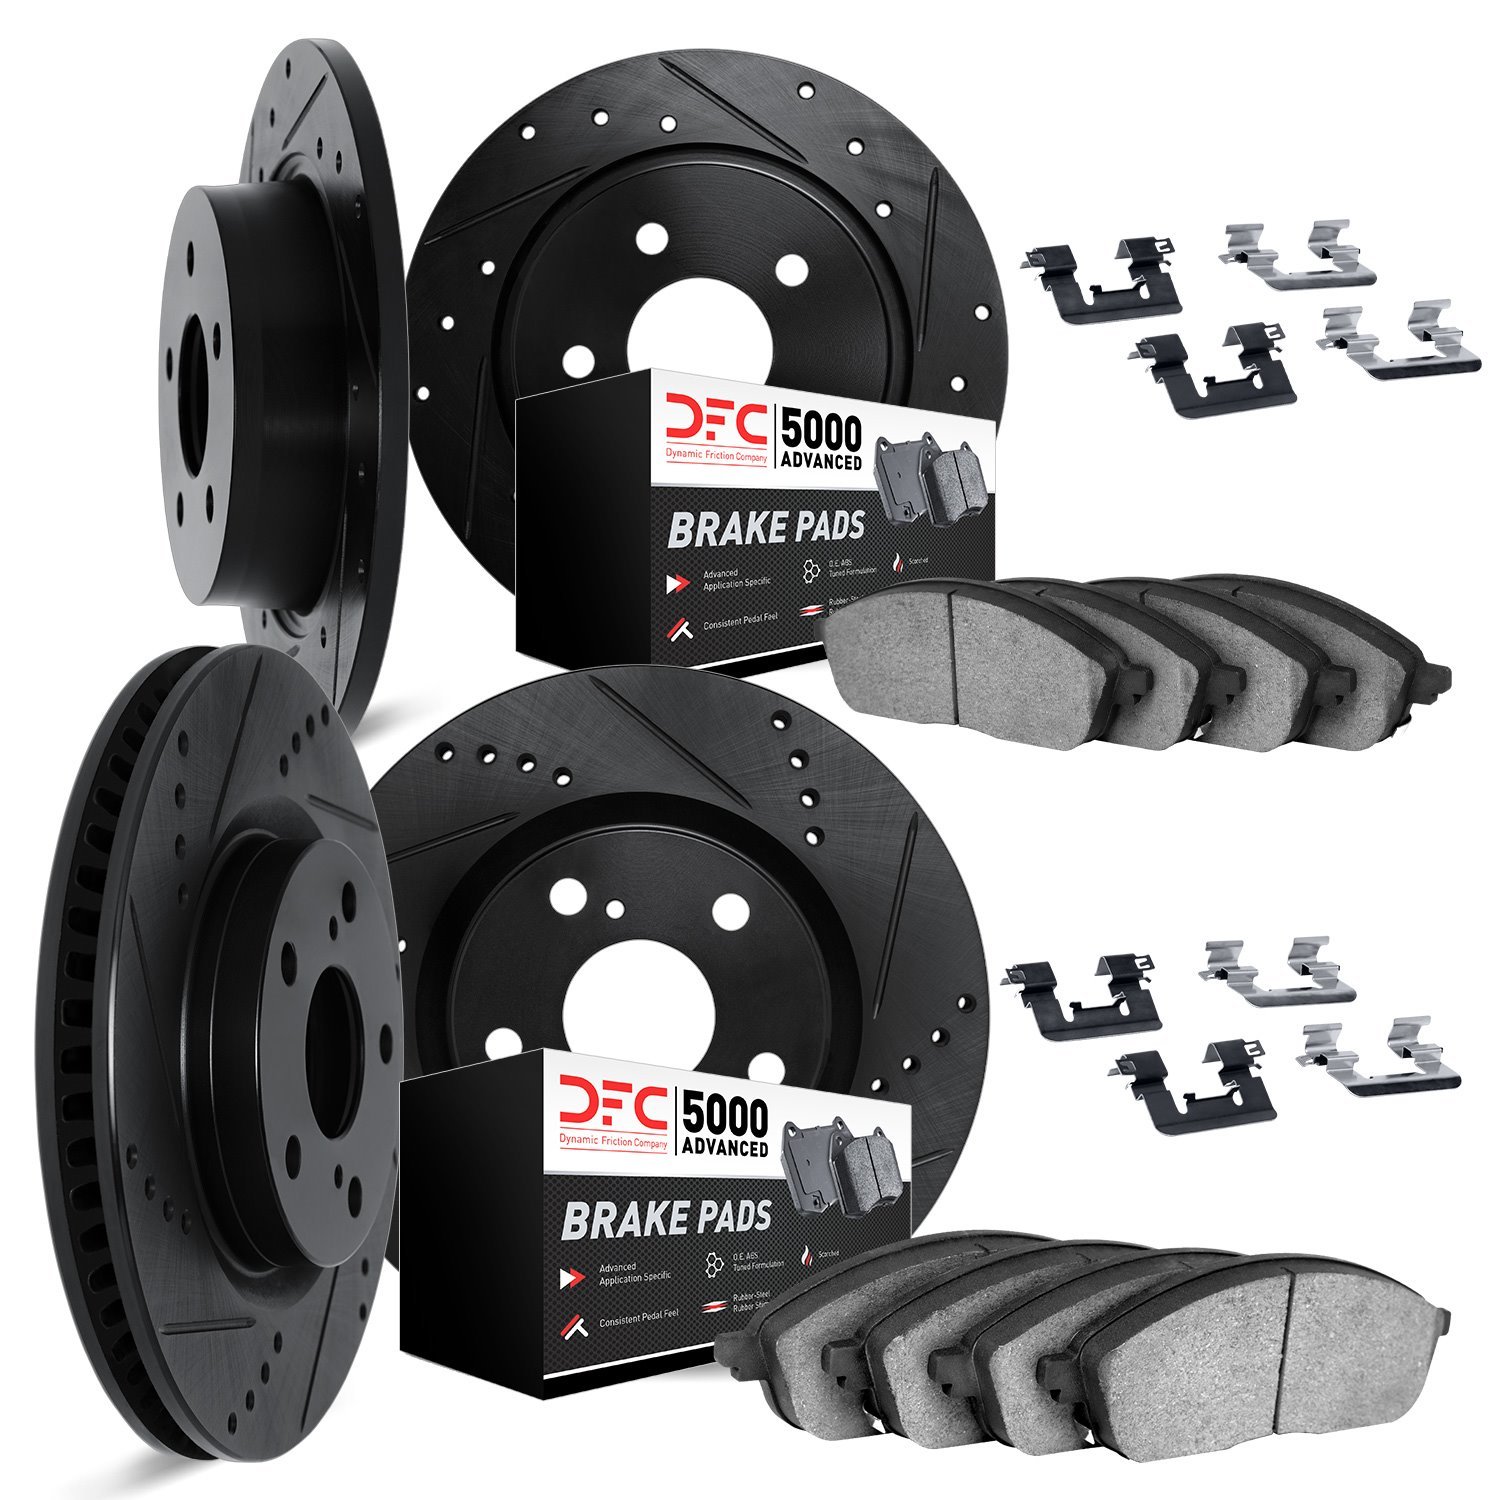 8514-42016 Drilled/Slotted Brake Rotors w/5000 Advanced Brake Pads Kit & Hardware [Black], Fits Select Mopar, Position: Front an